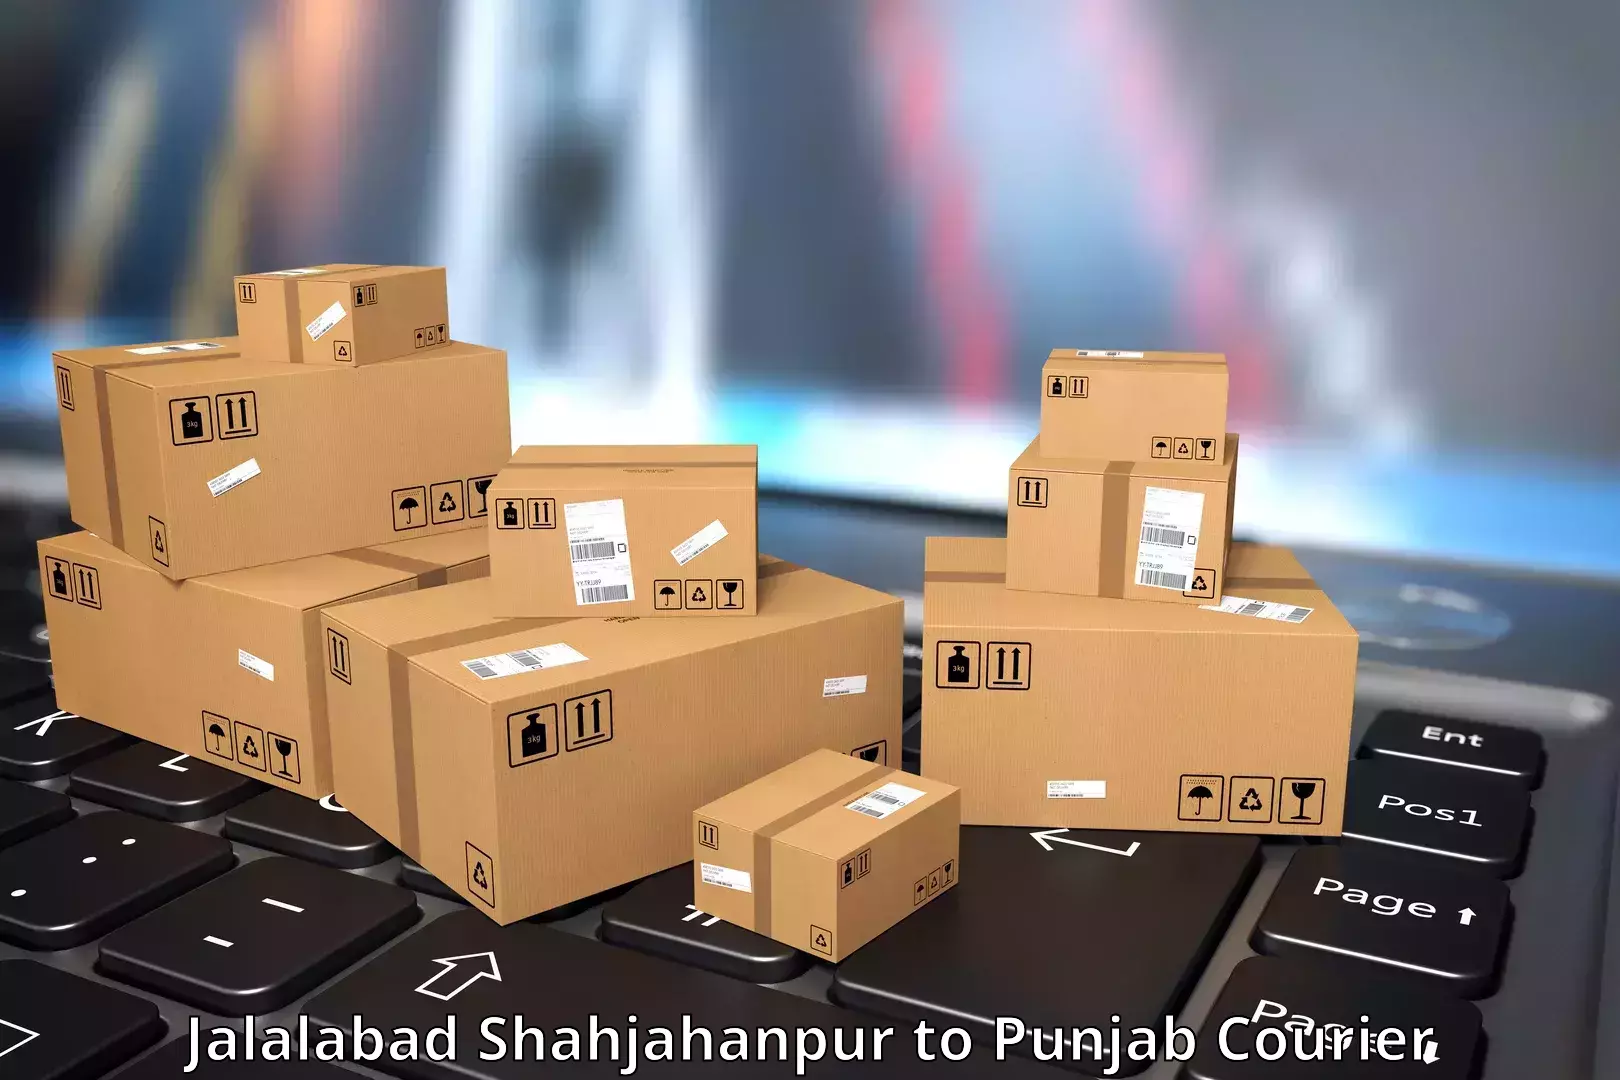 Courier service innovation Jalalabad Shahjahanpur to Amritsar